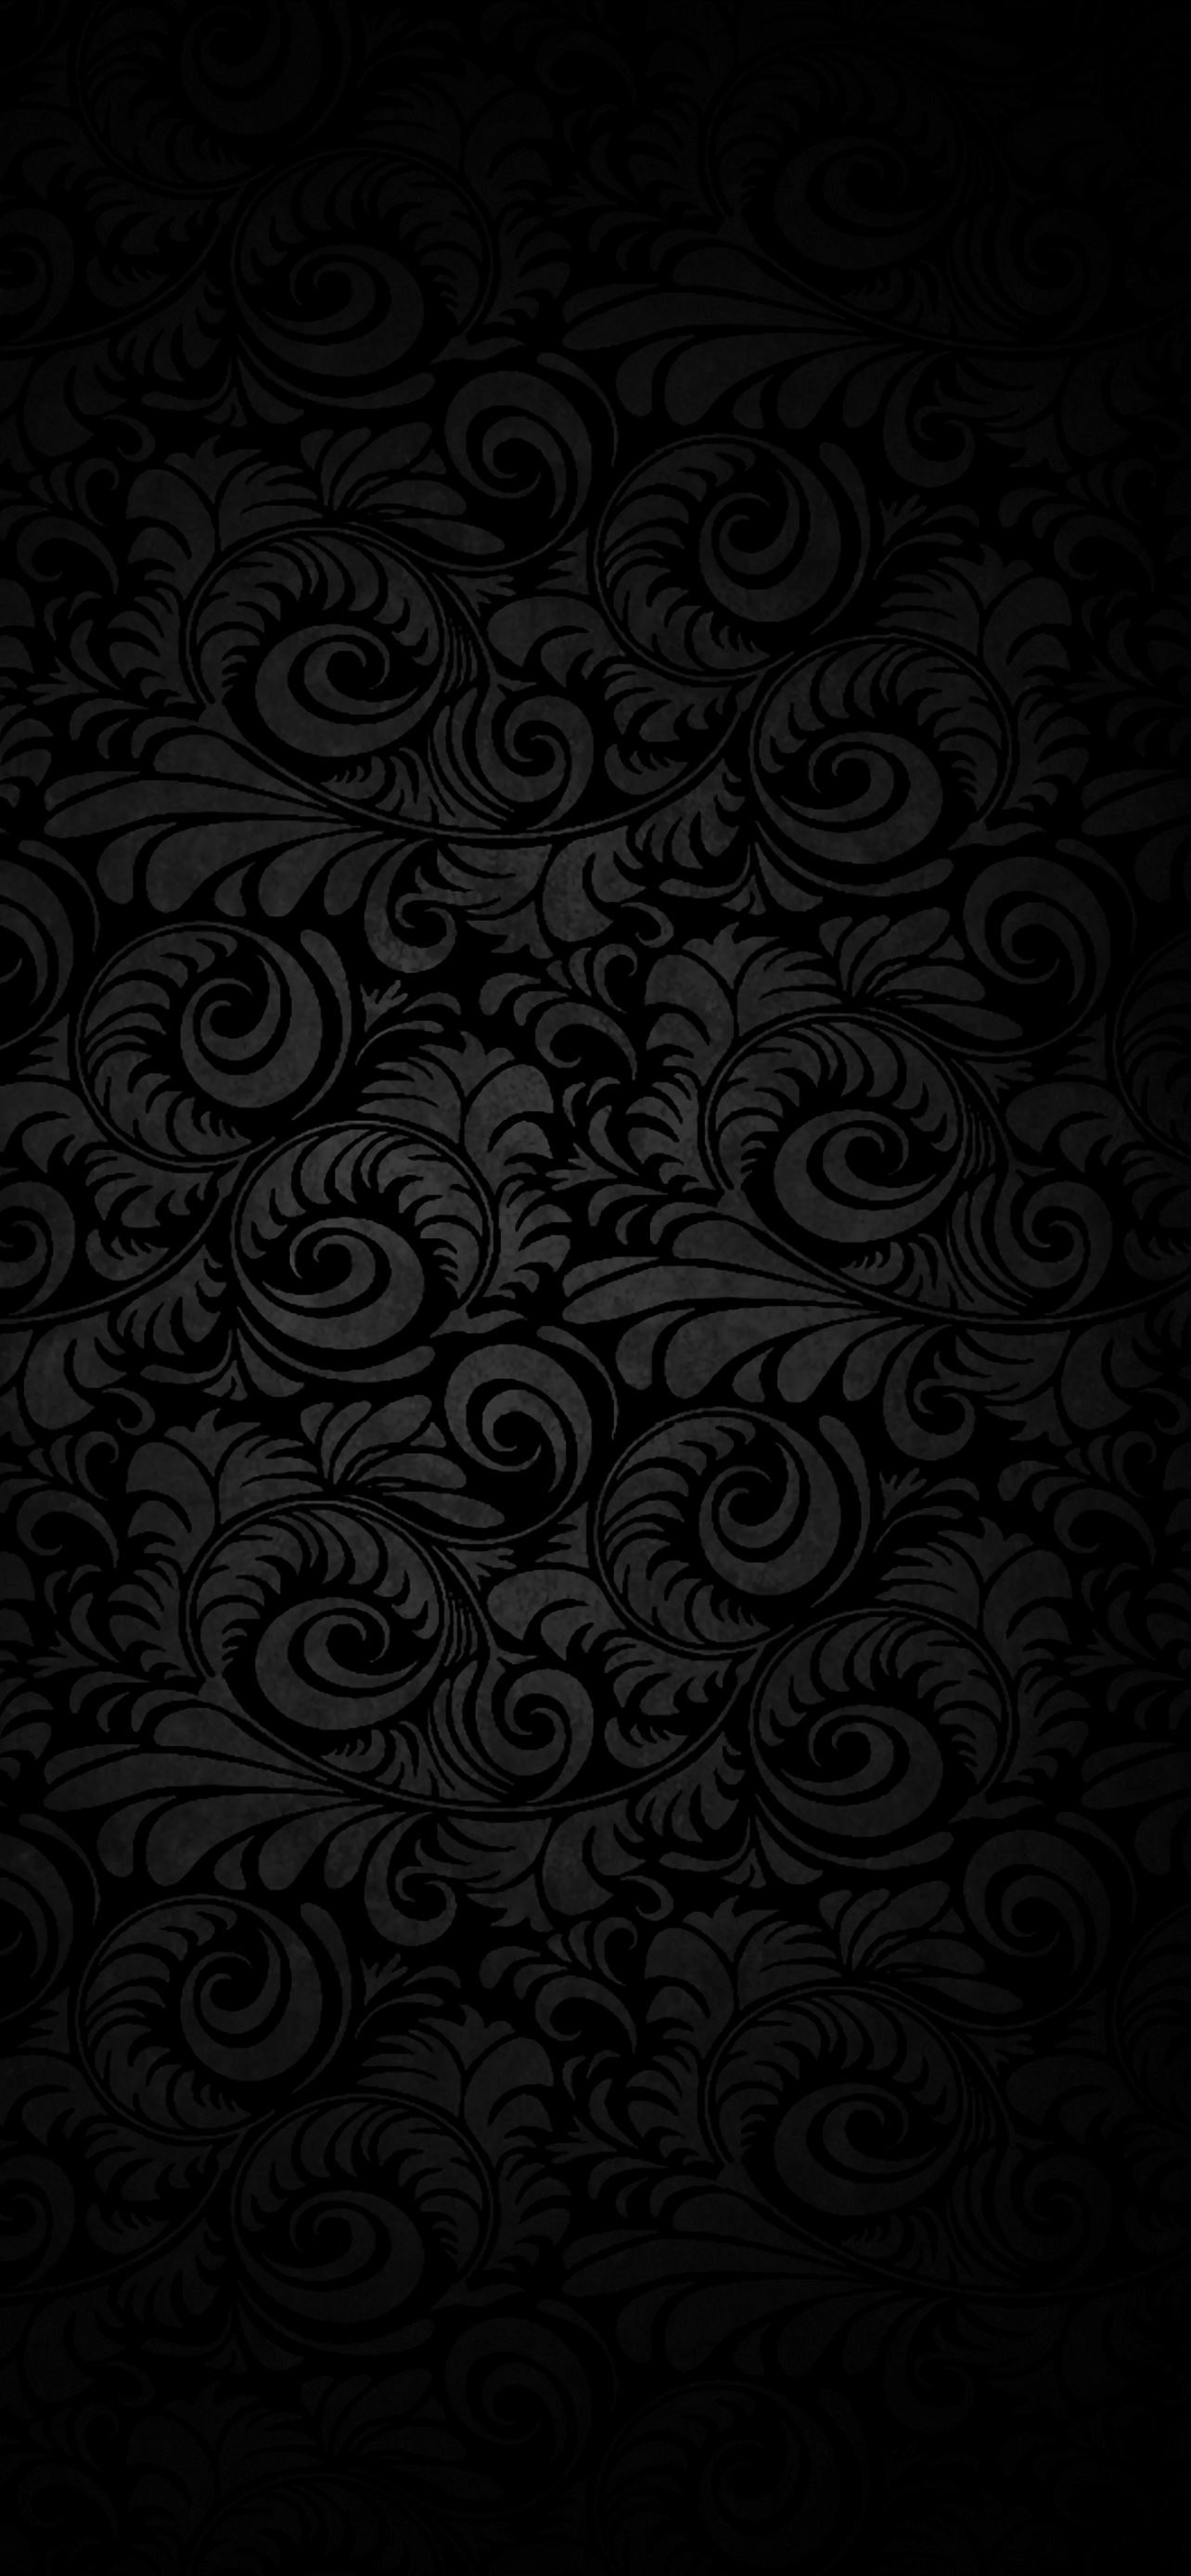 iOS 13 Wallpaper 4K Black background Red Stock 792